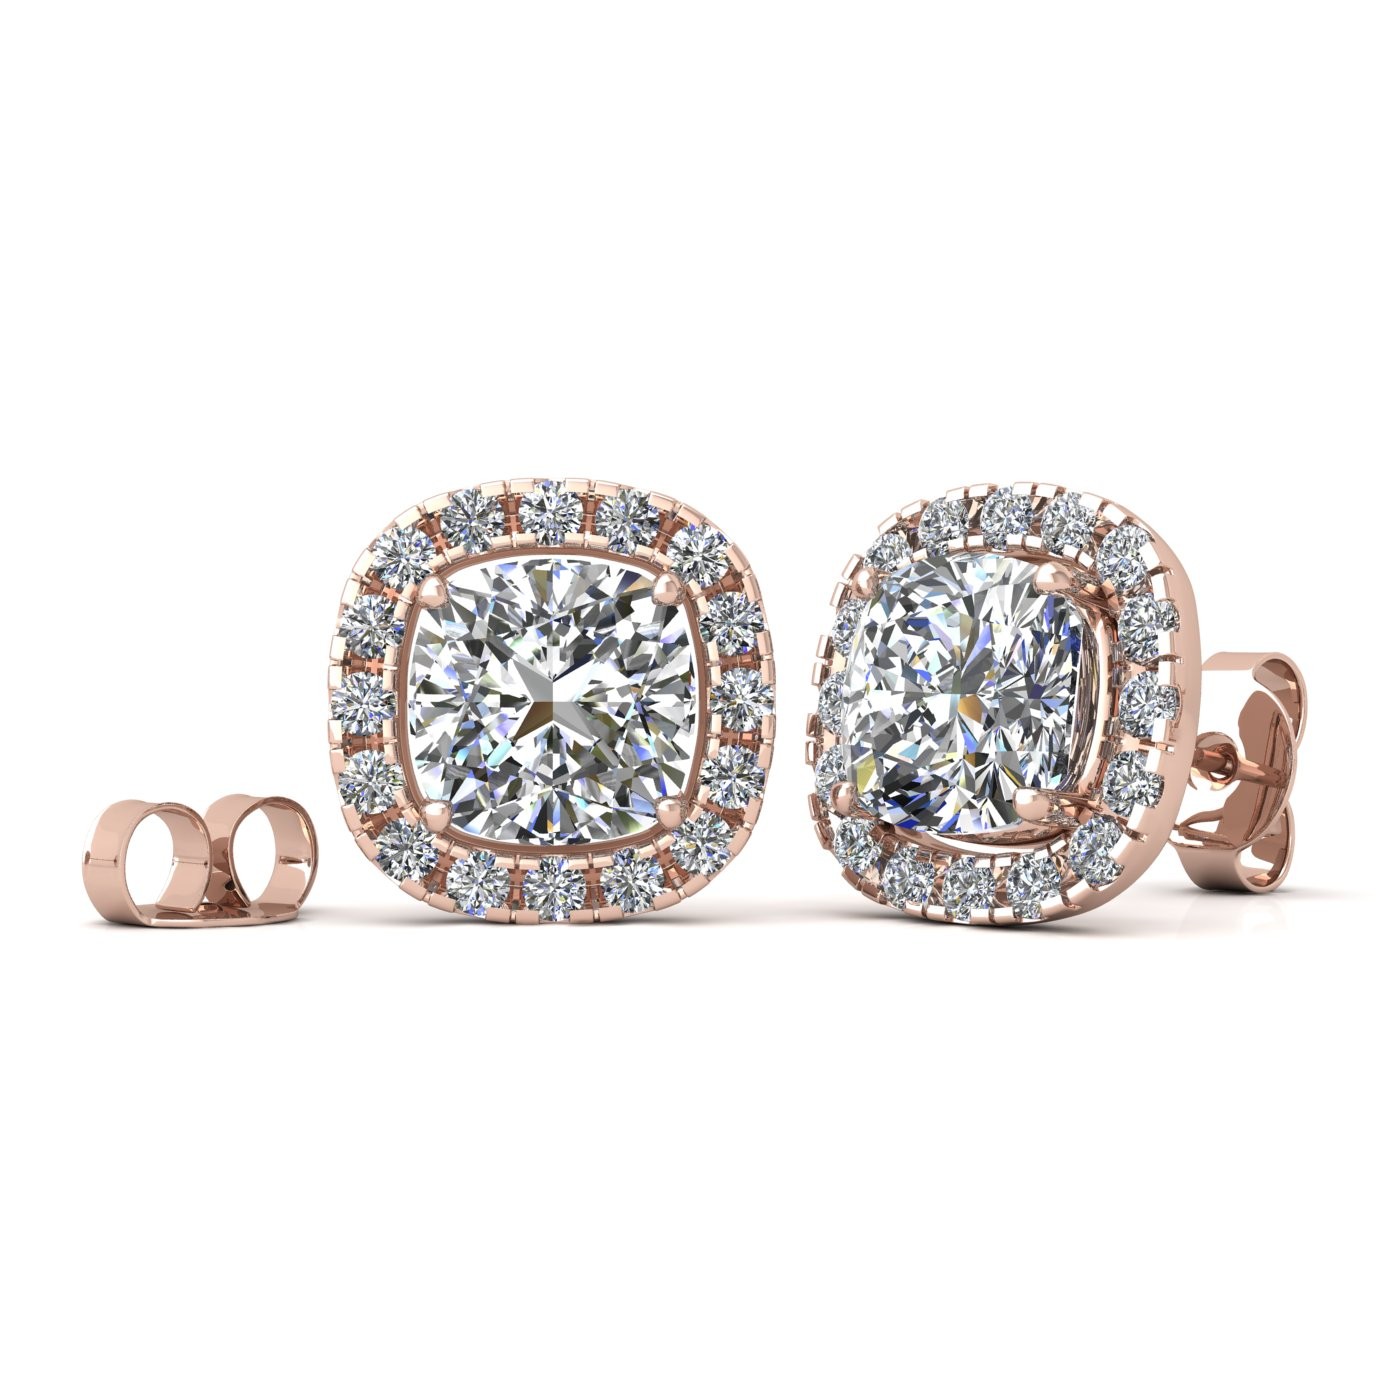 18k white gold 1,2 ct each (2,4 tcw) 4 prongs cushion shape diamond earrings with diamond pavÉ set halo Photos & images